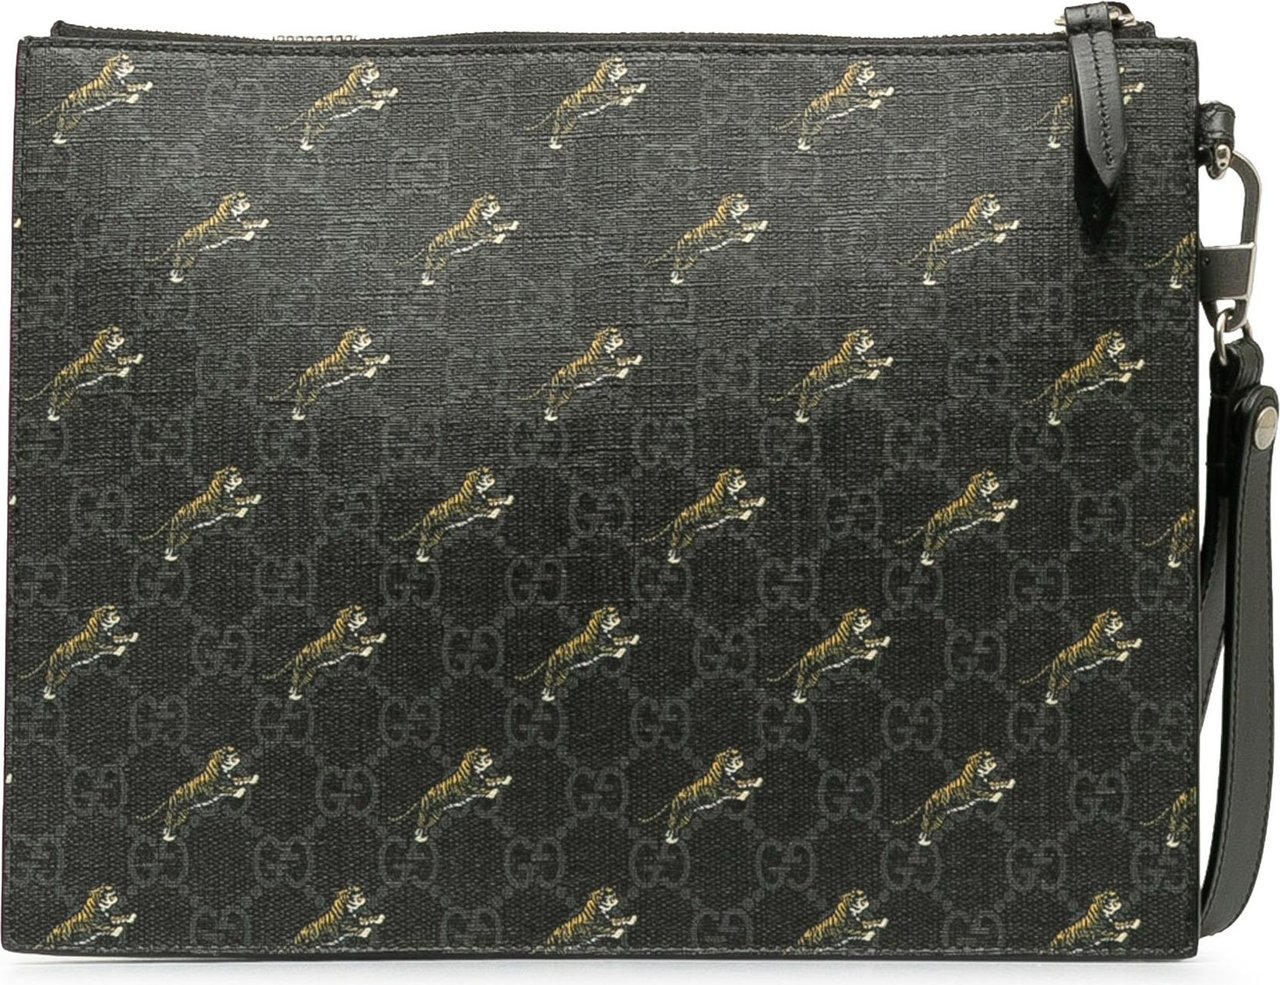 Gucci GG Supreme Tiger Clutch Bag Zwart